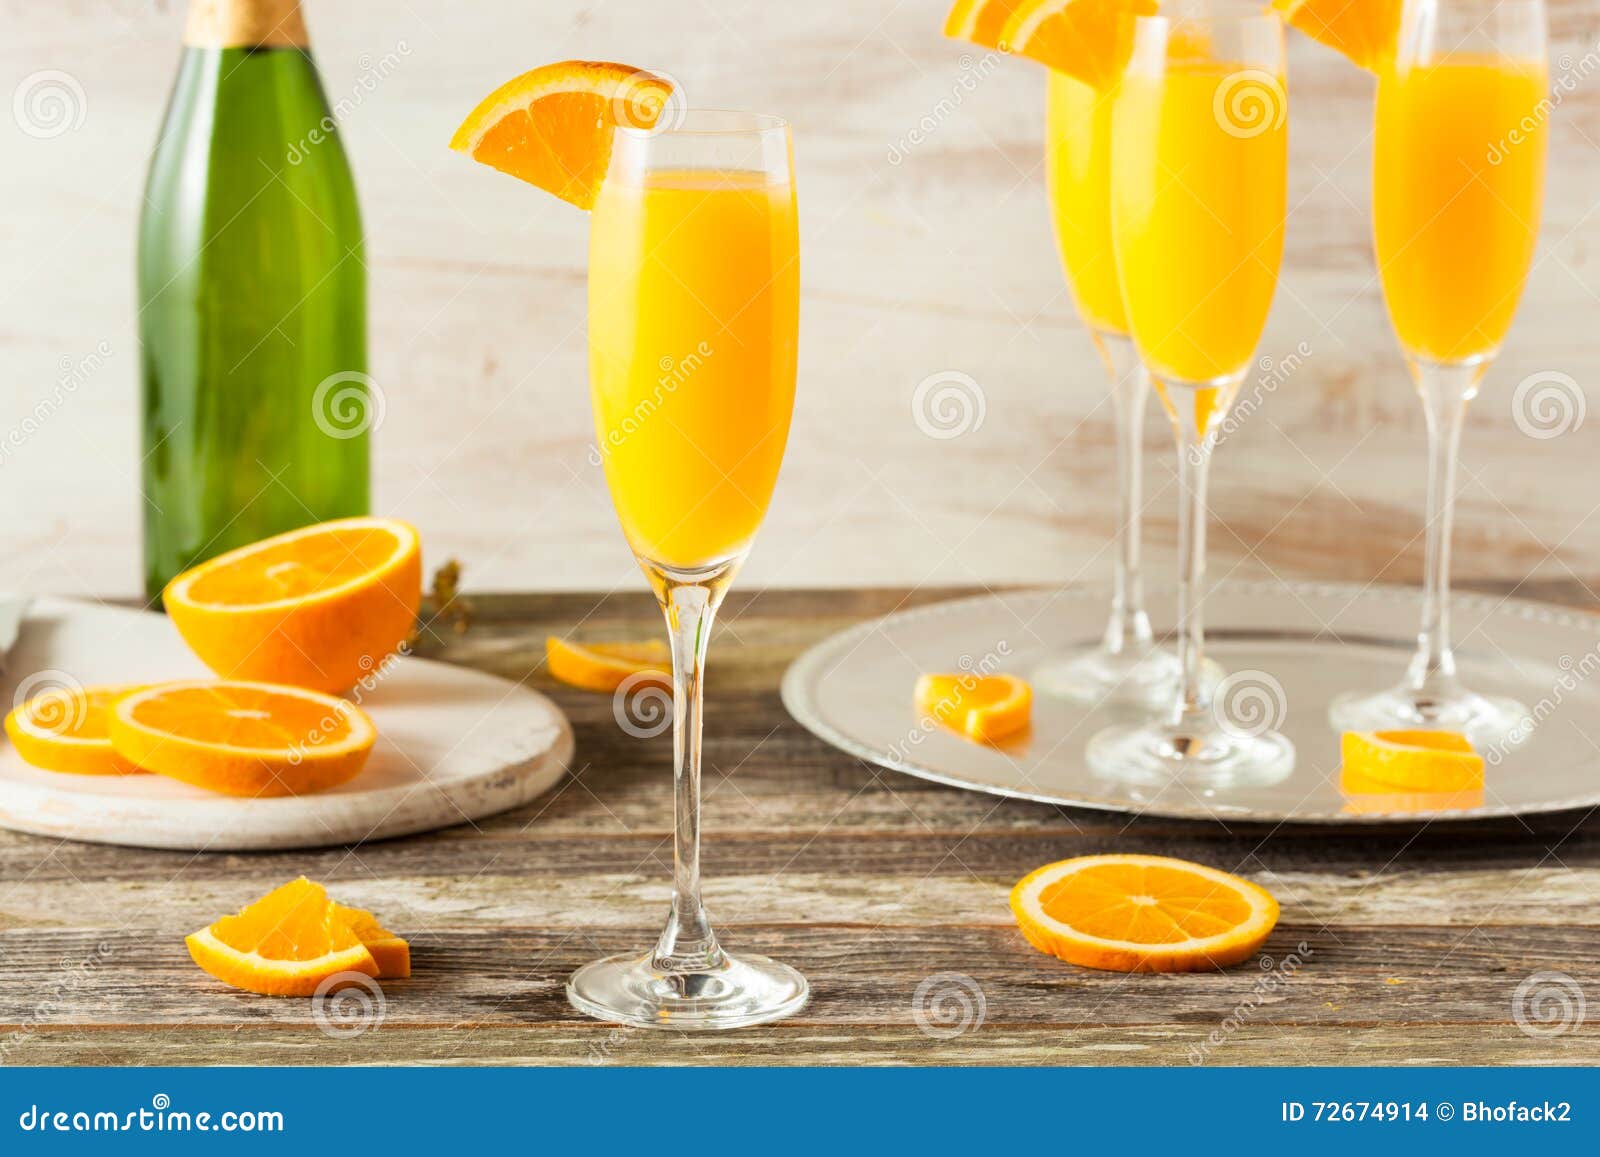 homemade refreshing orange mimosa cocktails